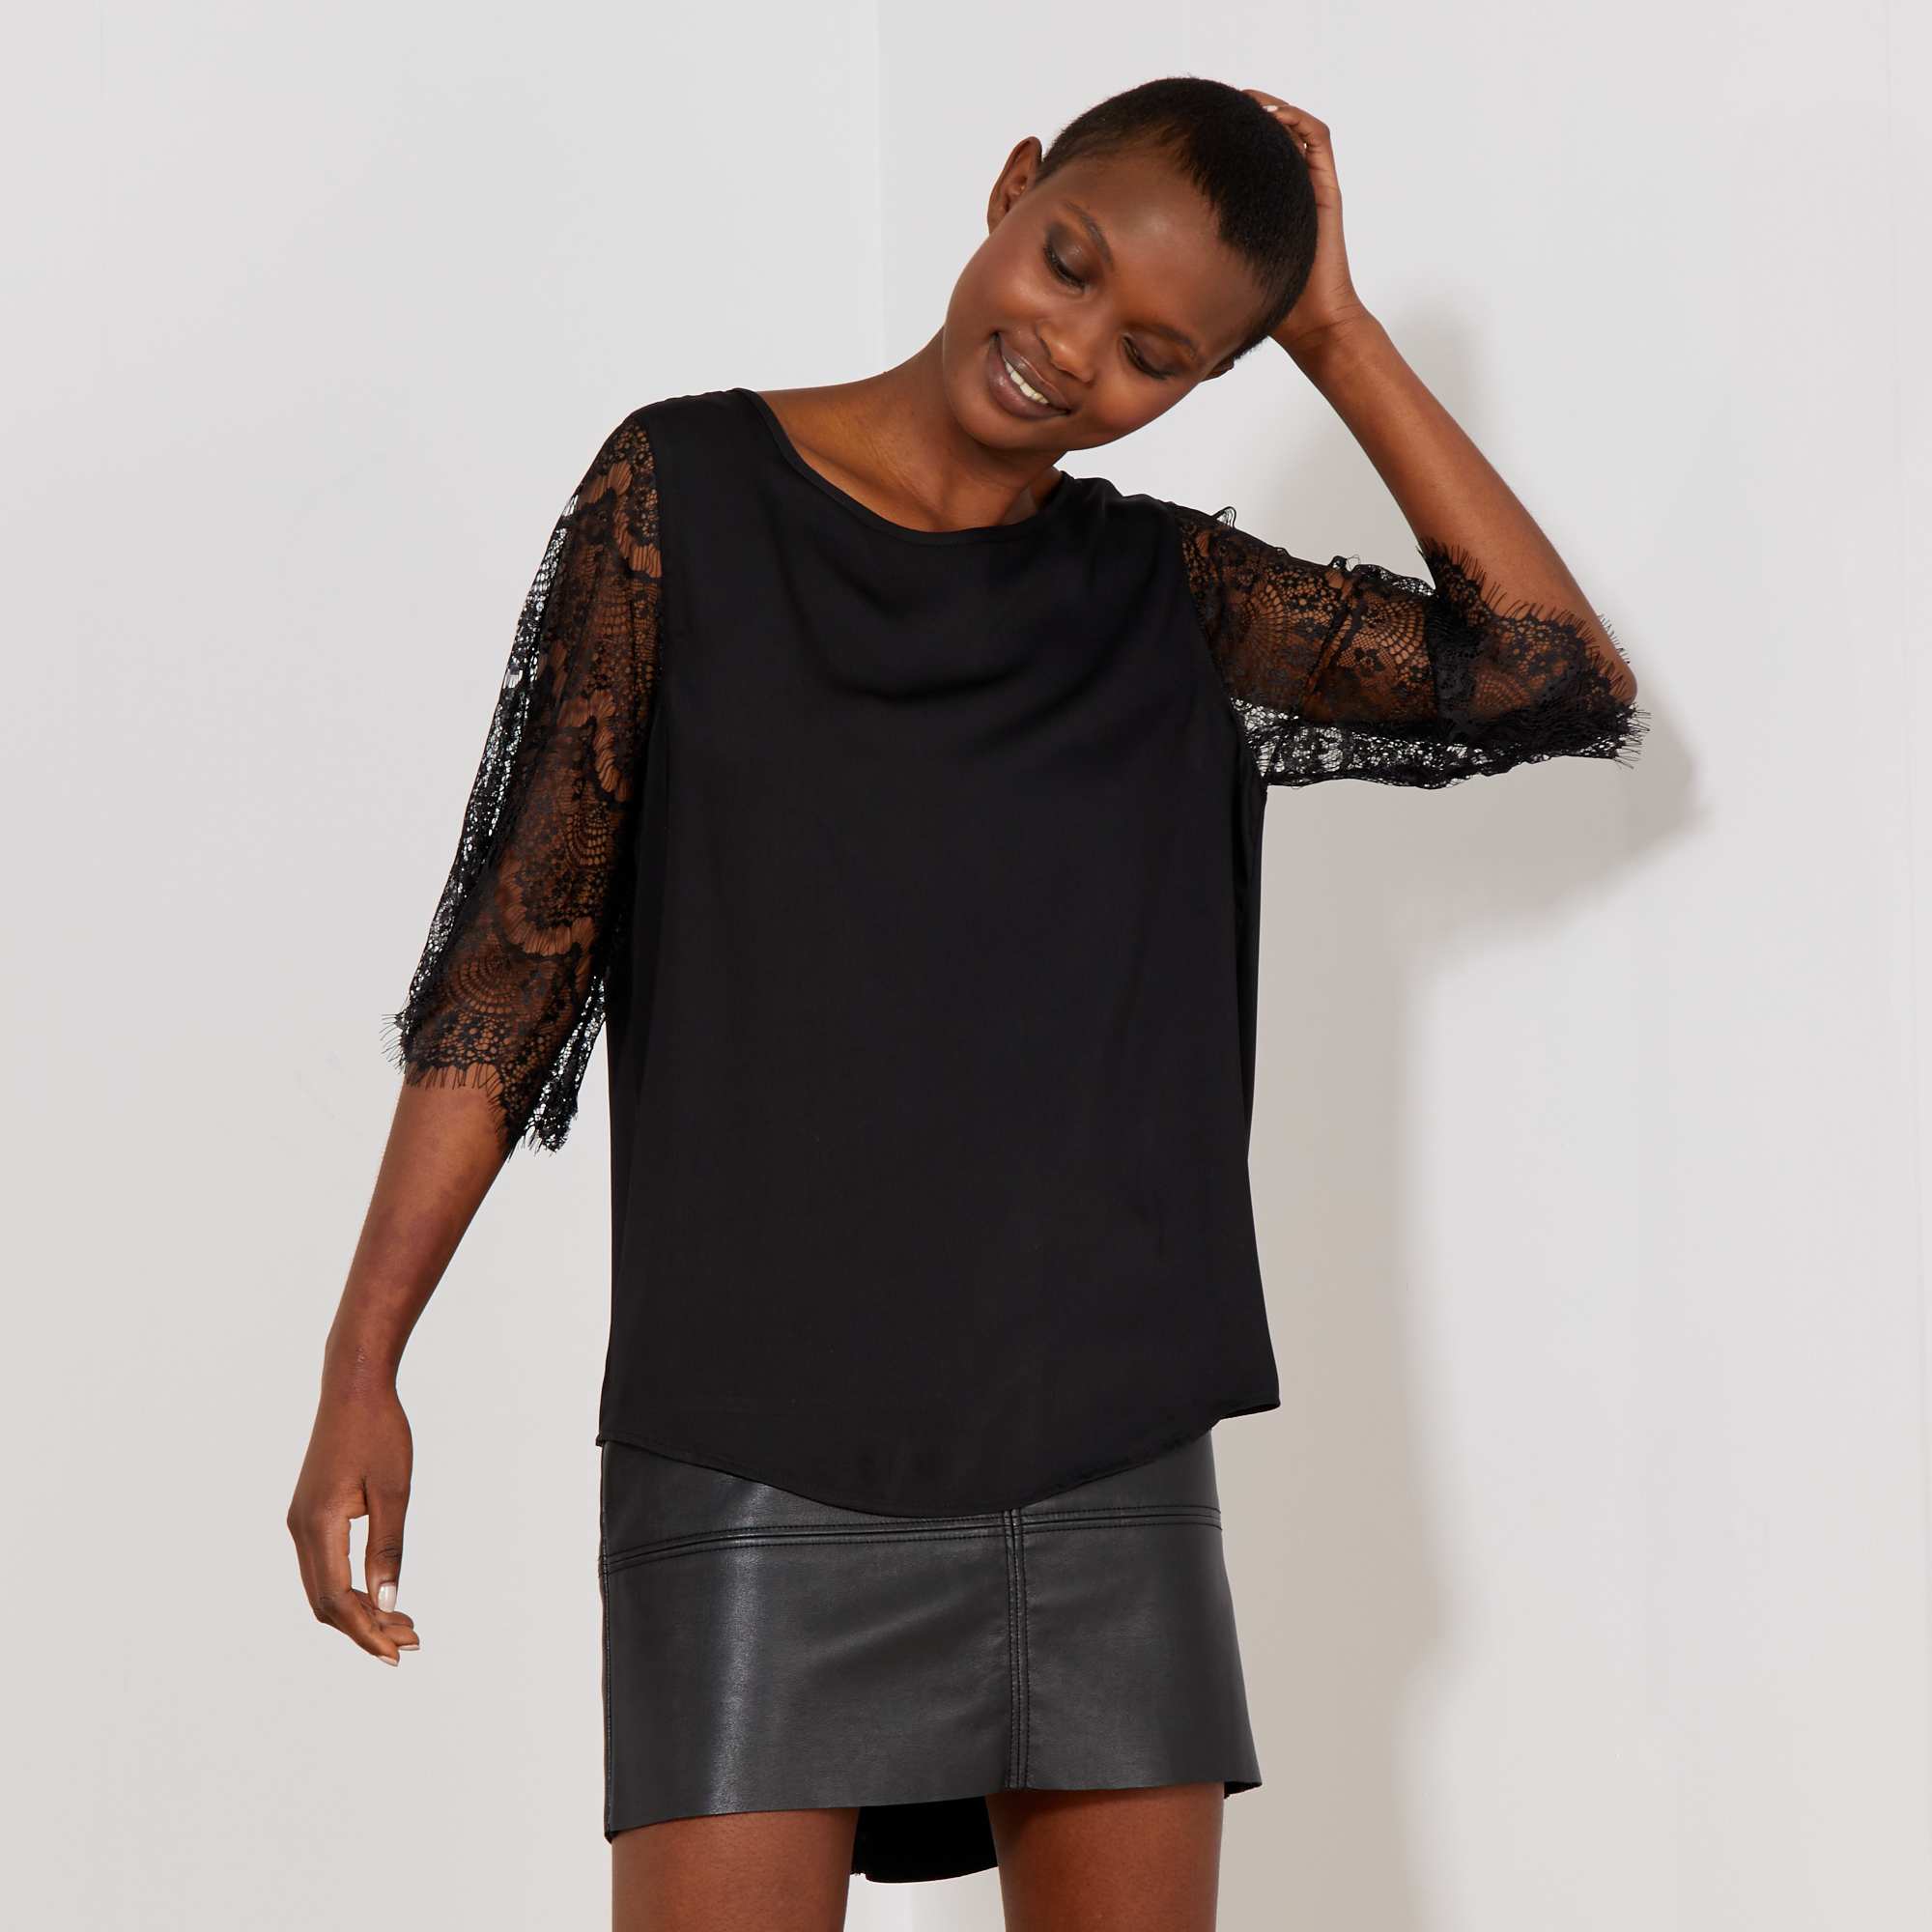 Blusa con encaje Mujer talla 34 a 48 - negro - Kiabi - 20,00€